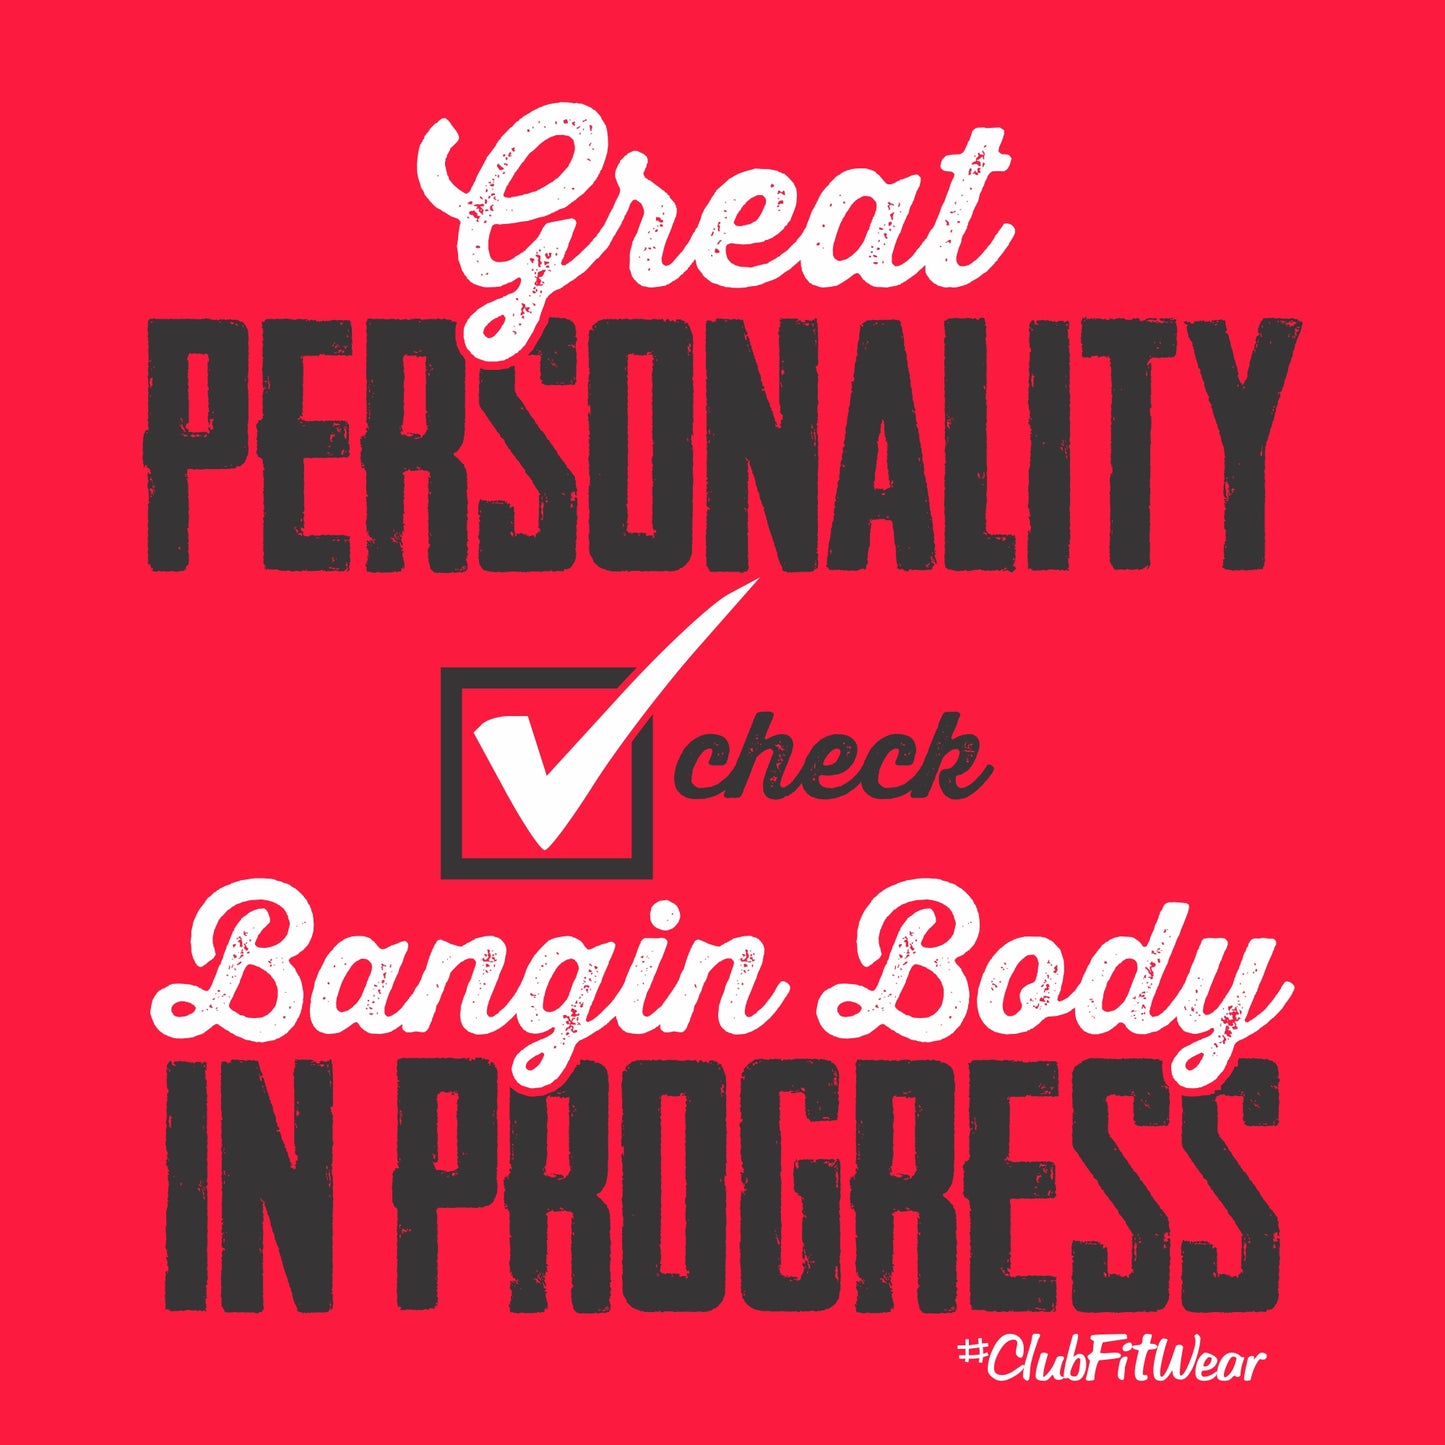 Great personality check, Bangin body in progress